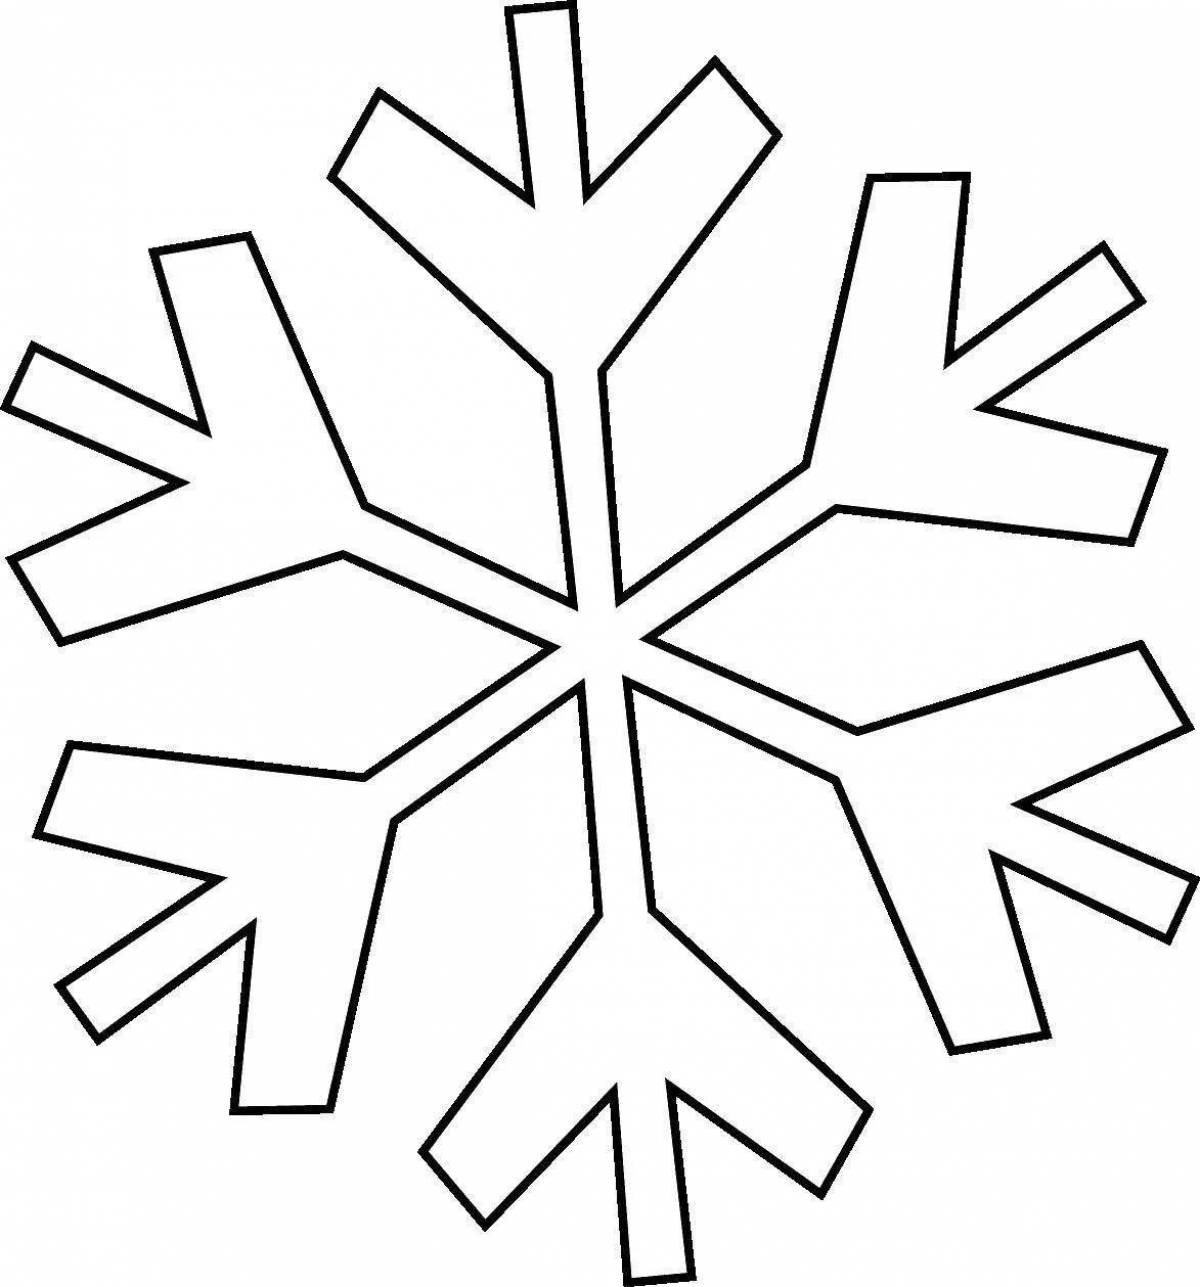 Impressive snowflake coloring page